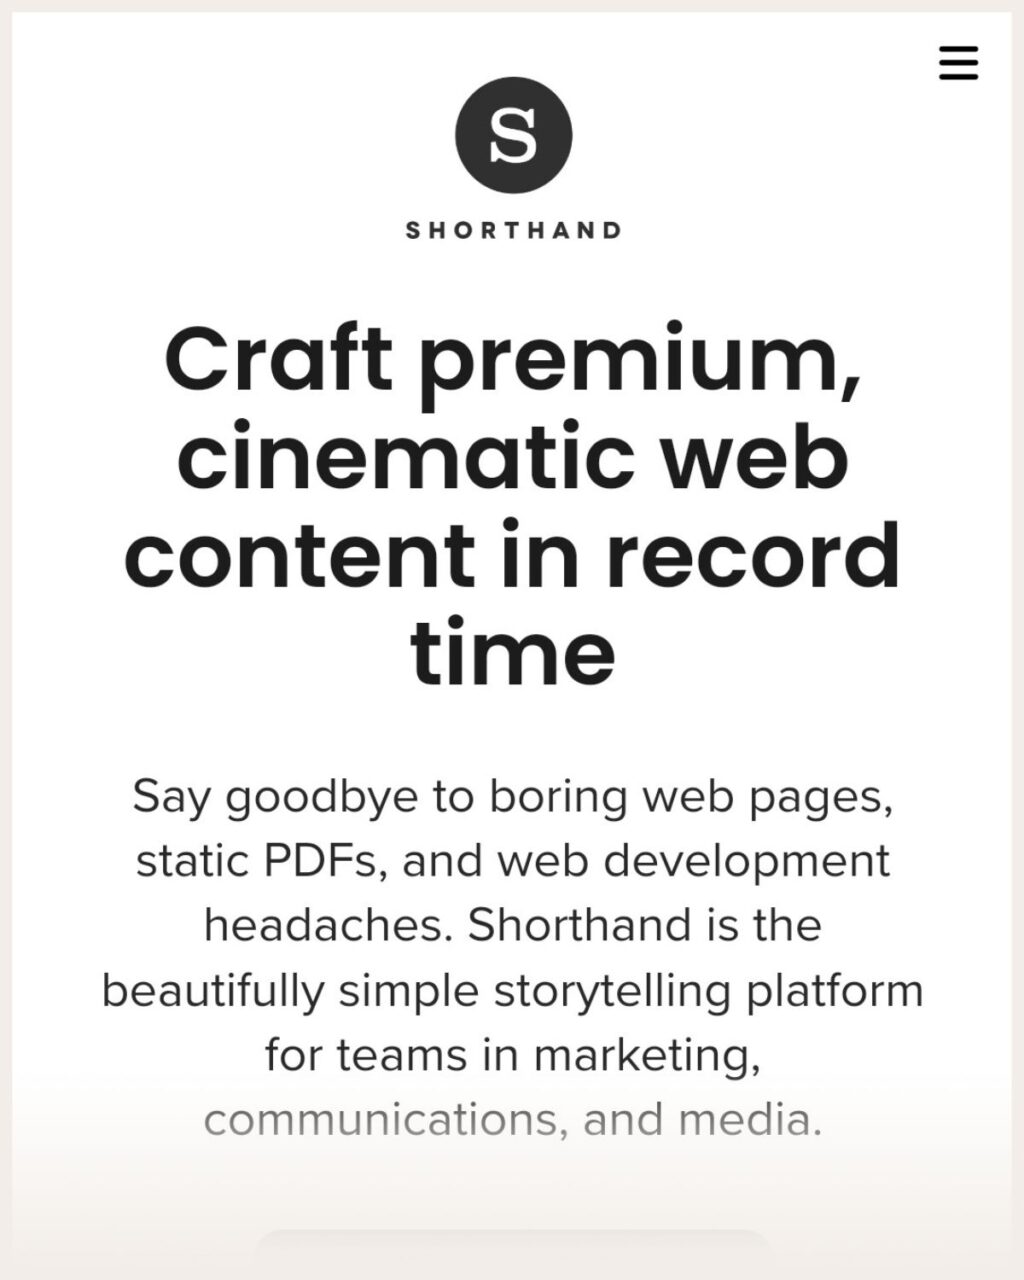 Shorthand Content website